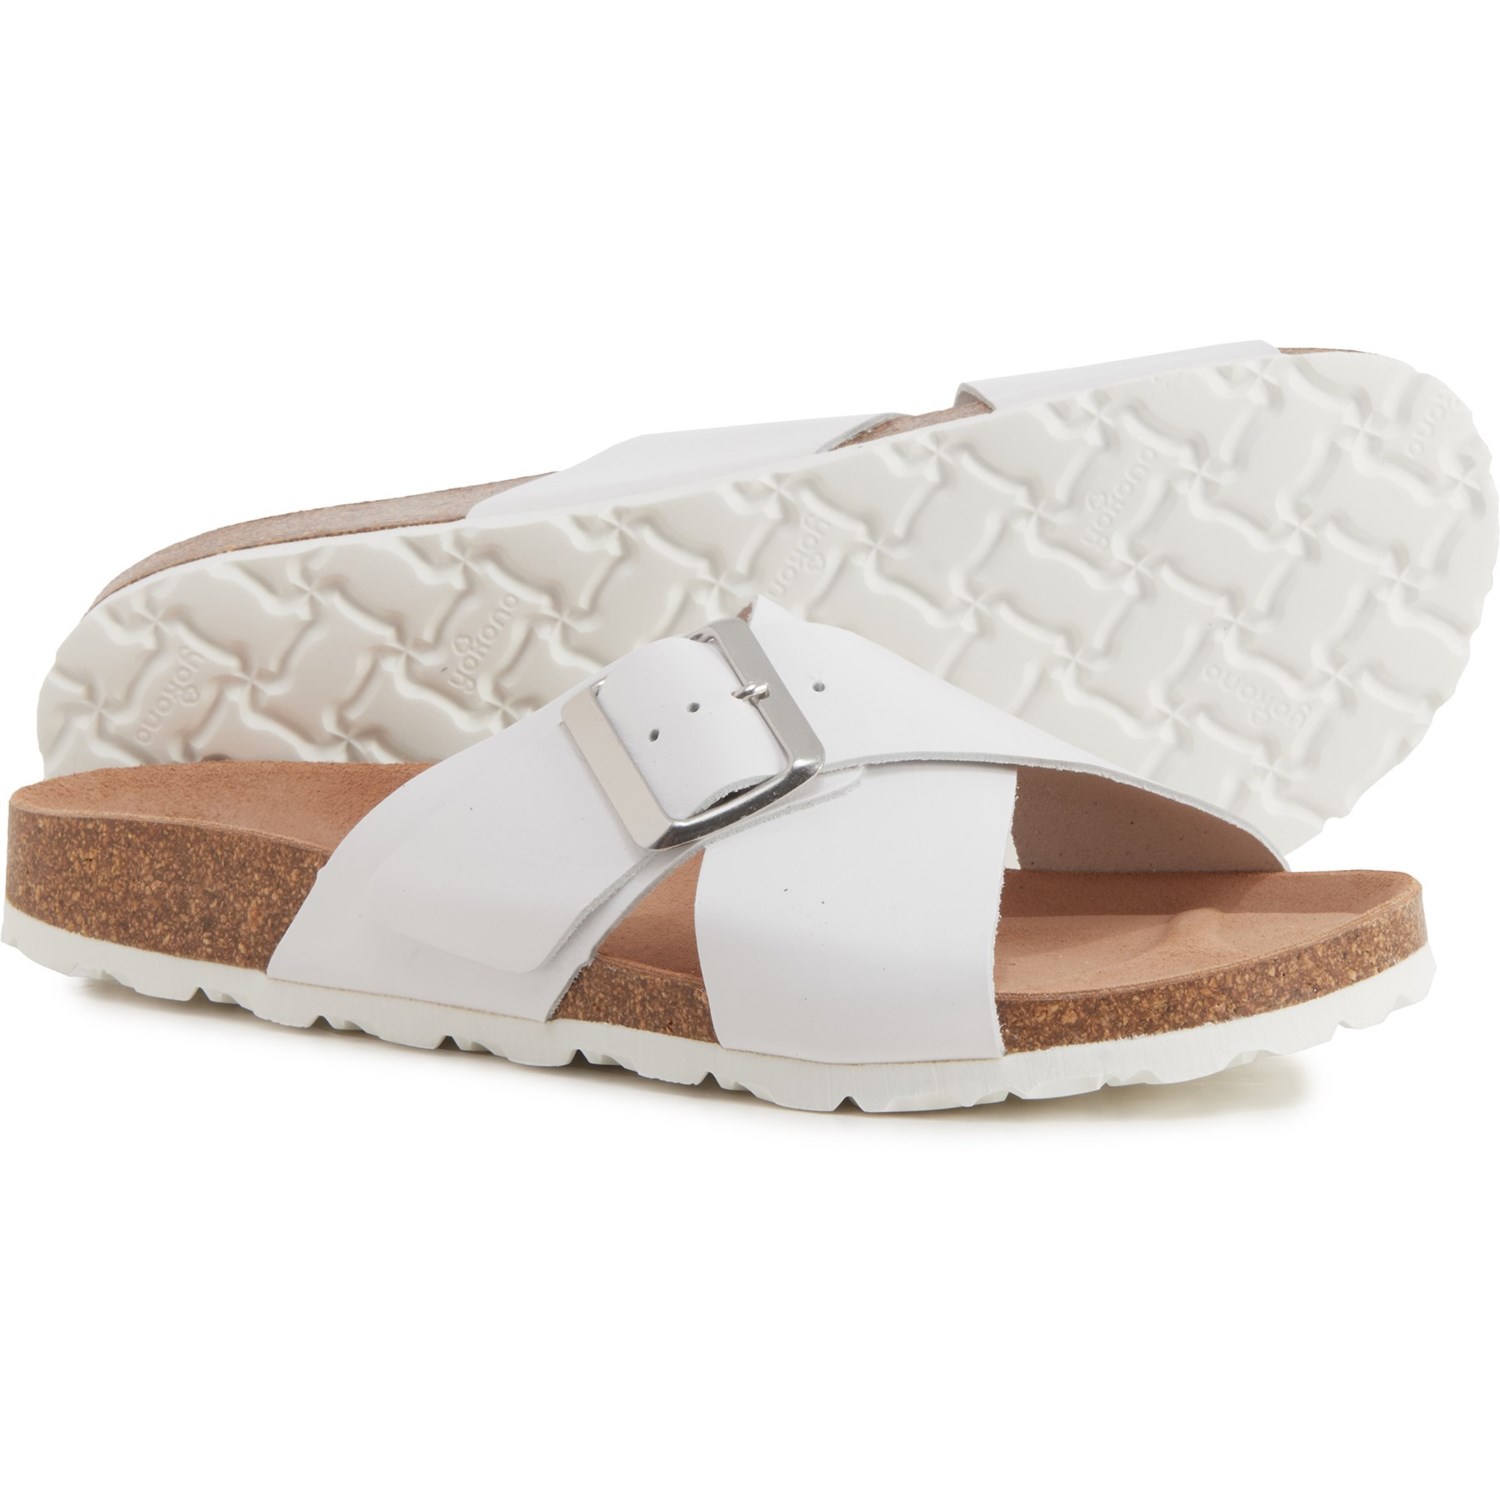 Yokono Made in Spain Crossband Buckle Sandals (For Women) - Save 55%